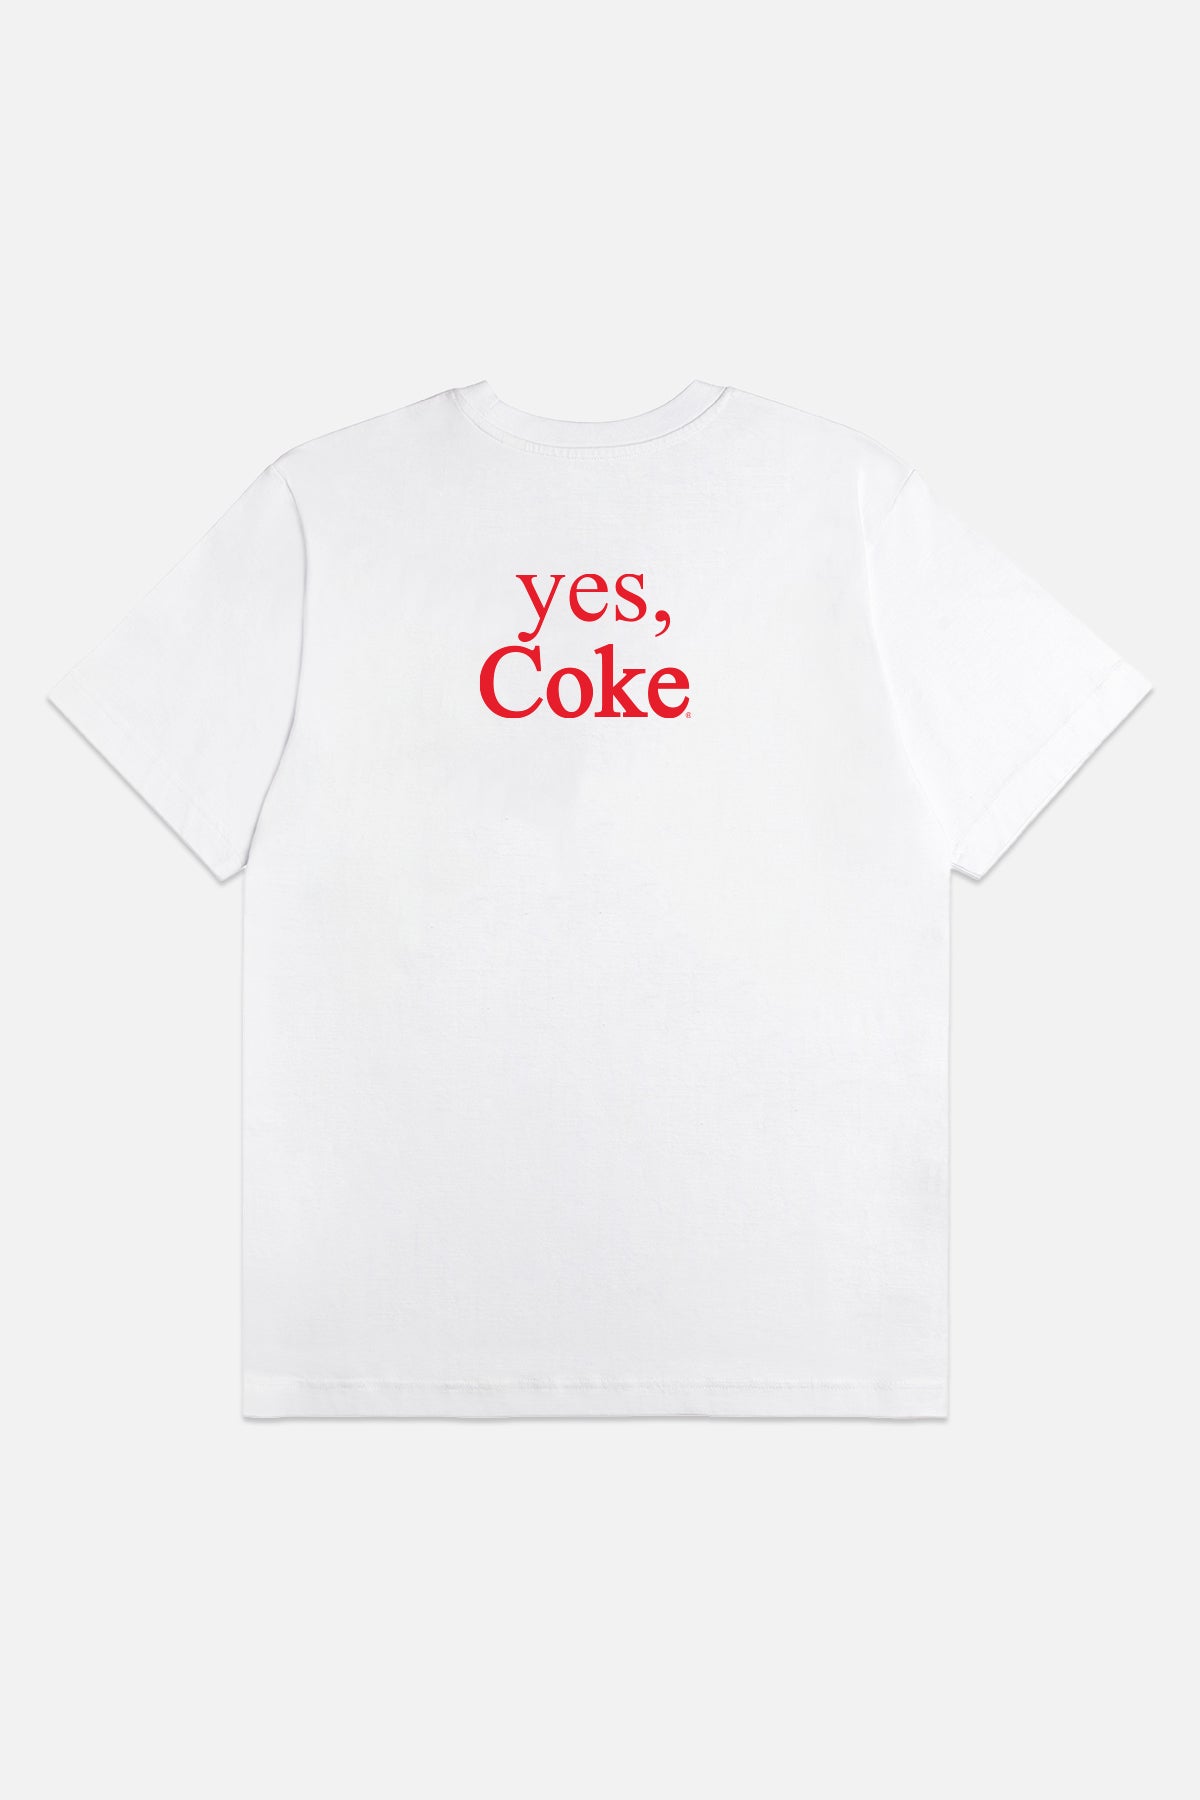 Coca-Cola Take Home Plenty T-shirt in White